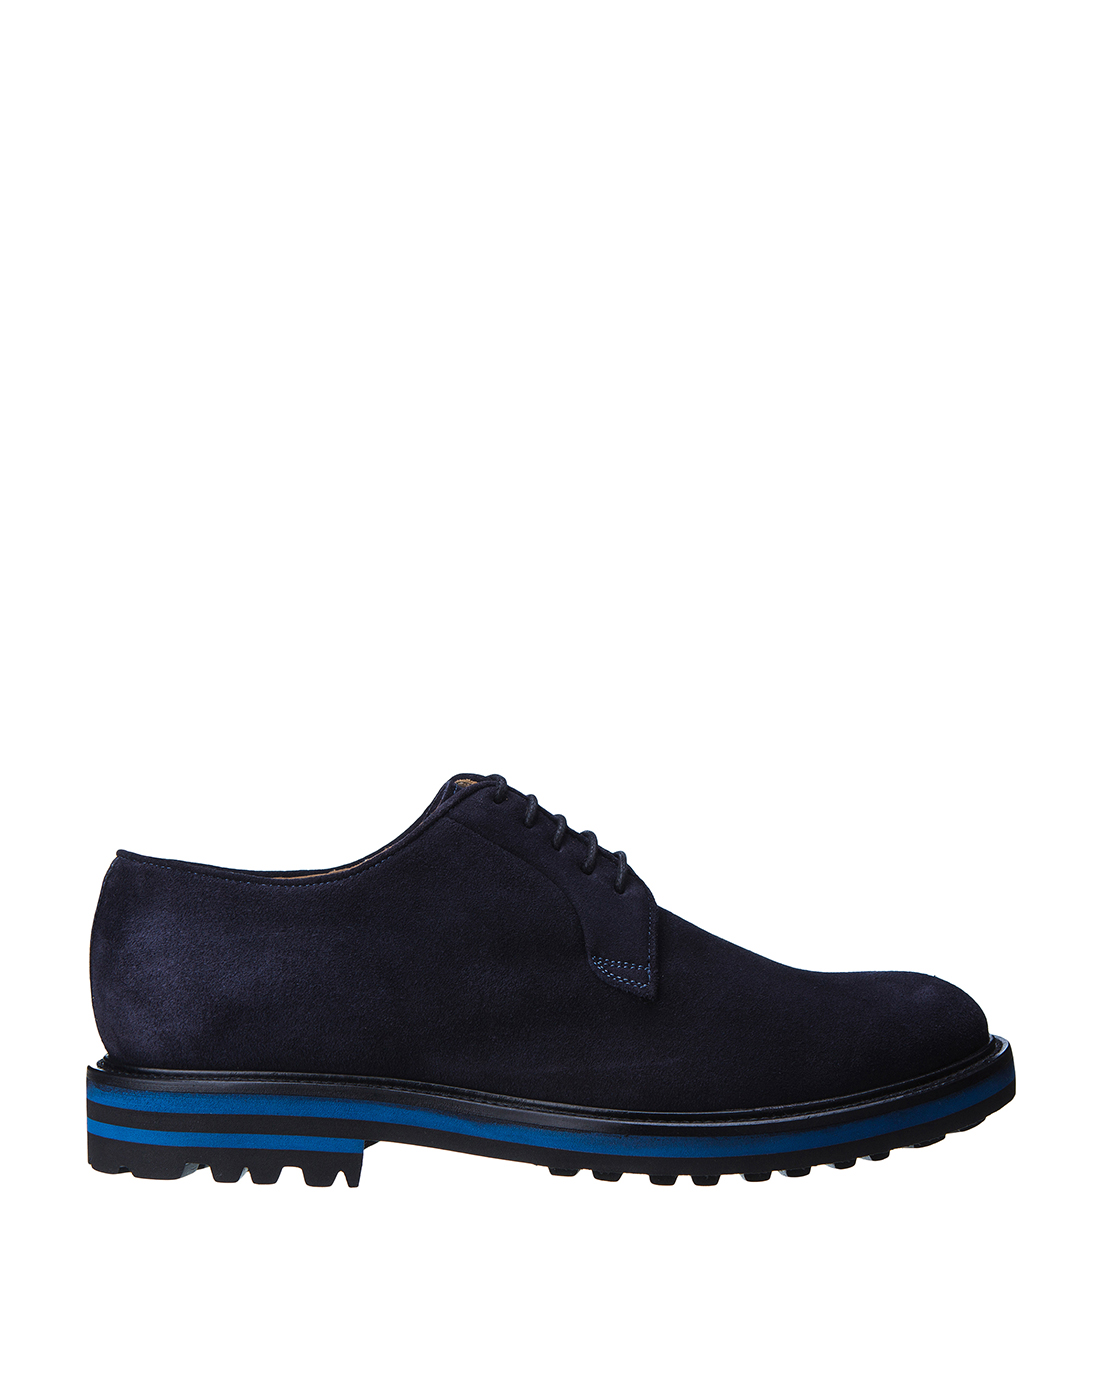 Туфли синие мужские Brecos S8073 BLUE-1